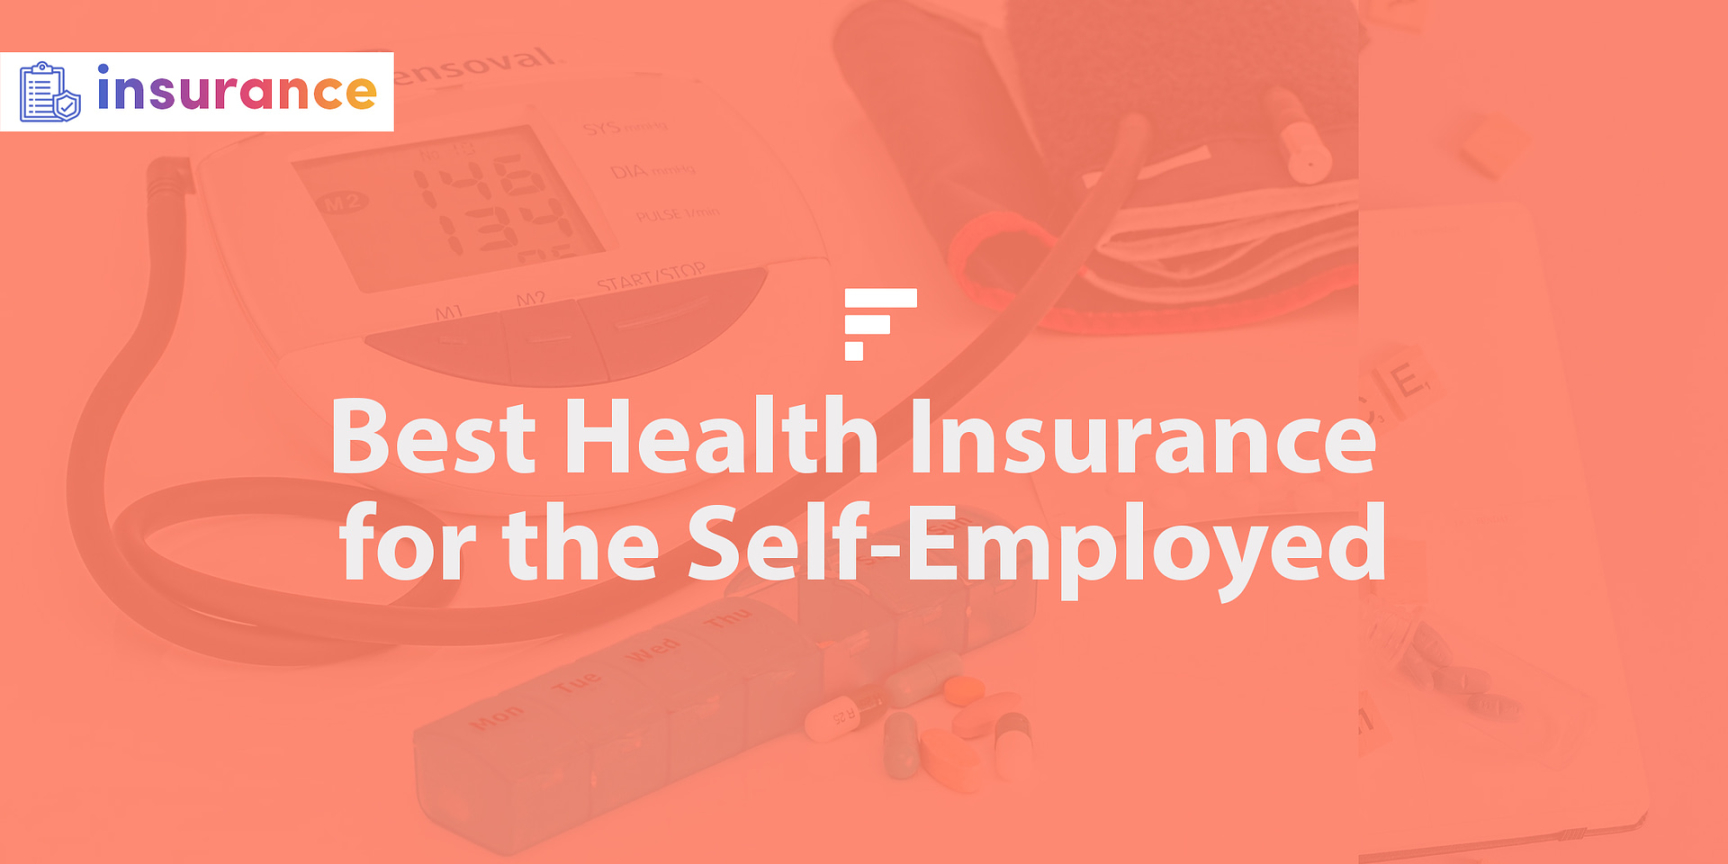 best health insurance for self employed: Best Health Insurance for the Self-Employed in